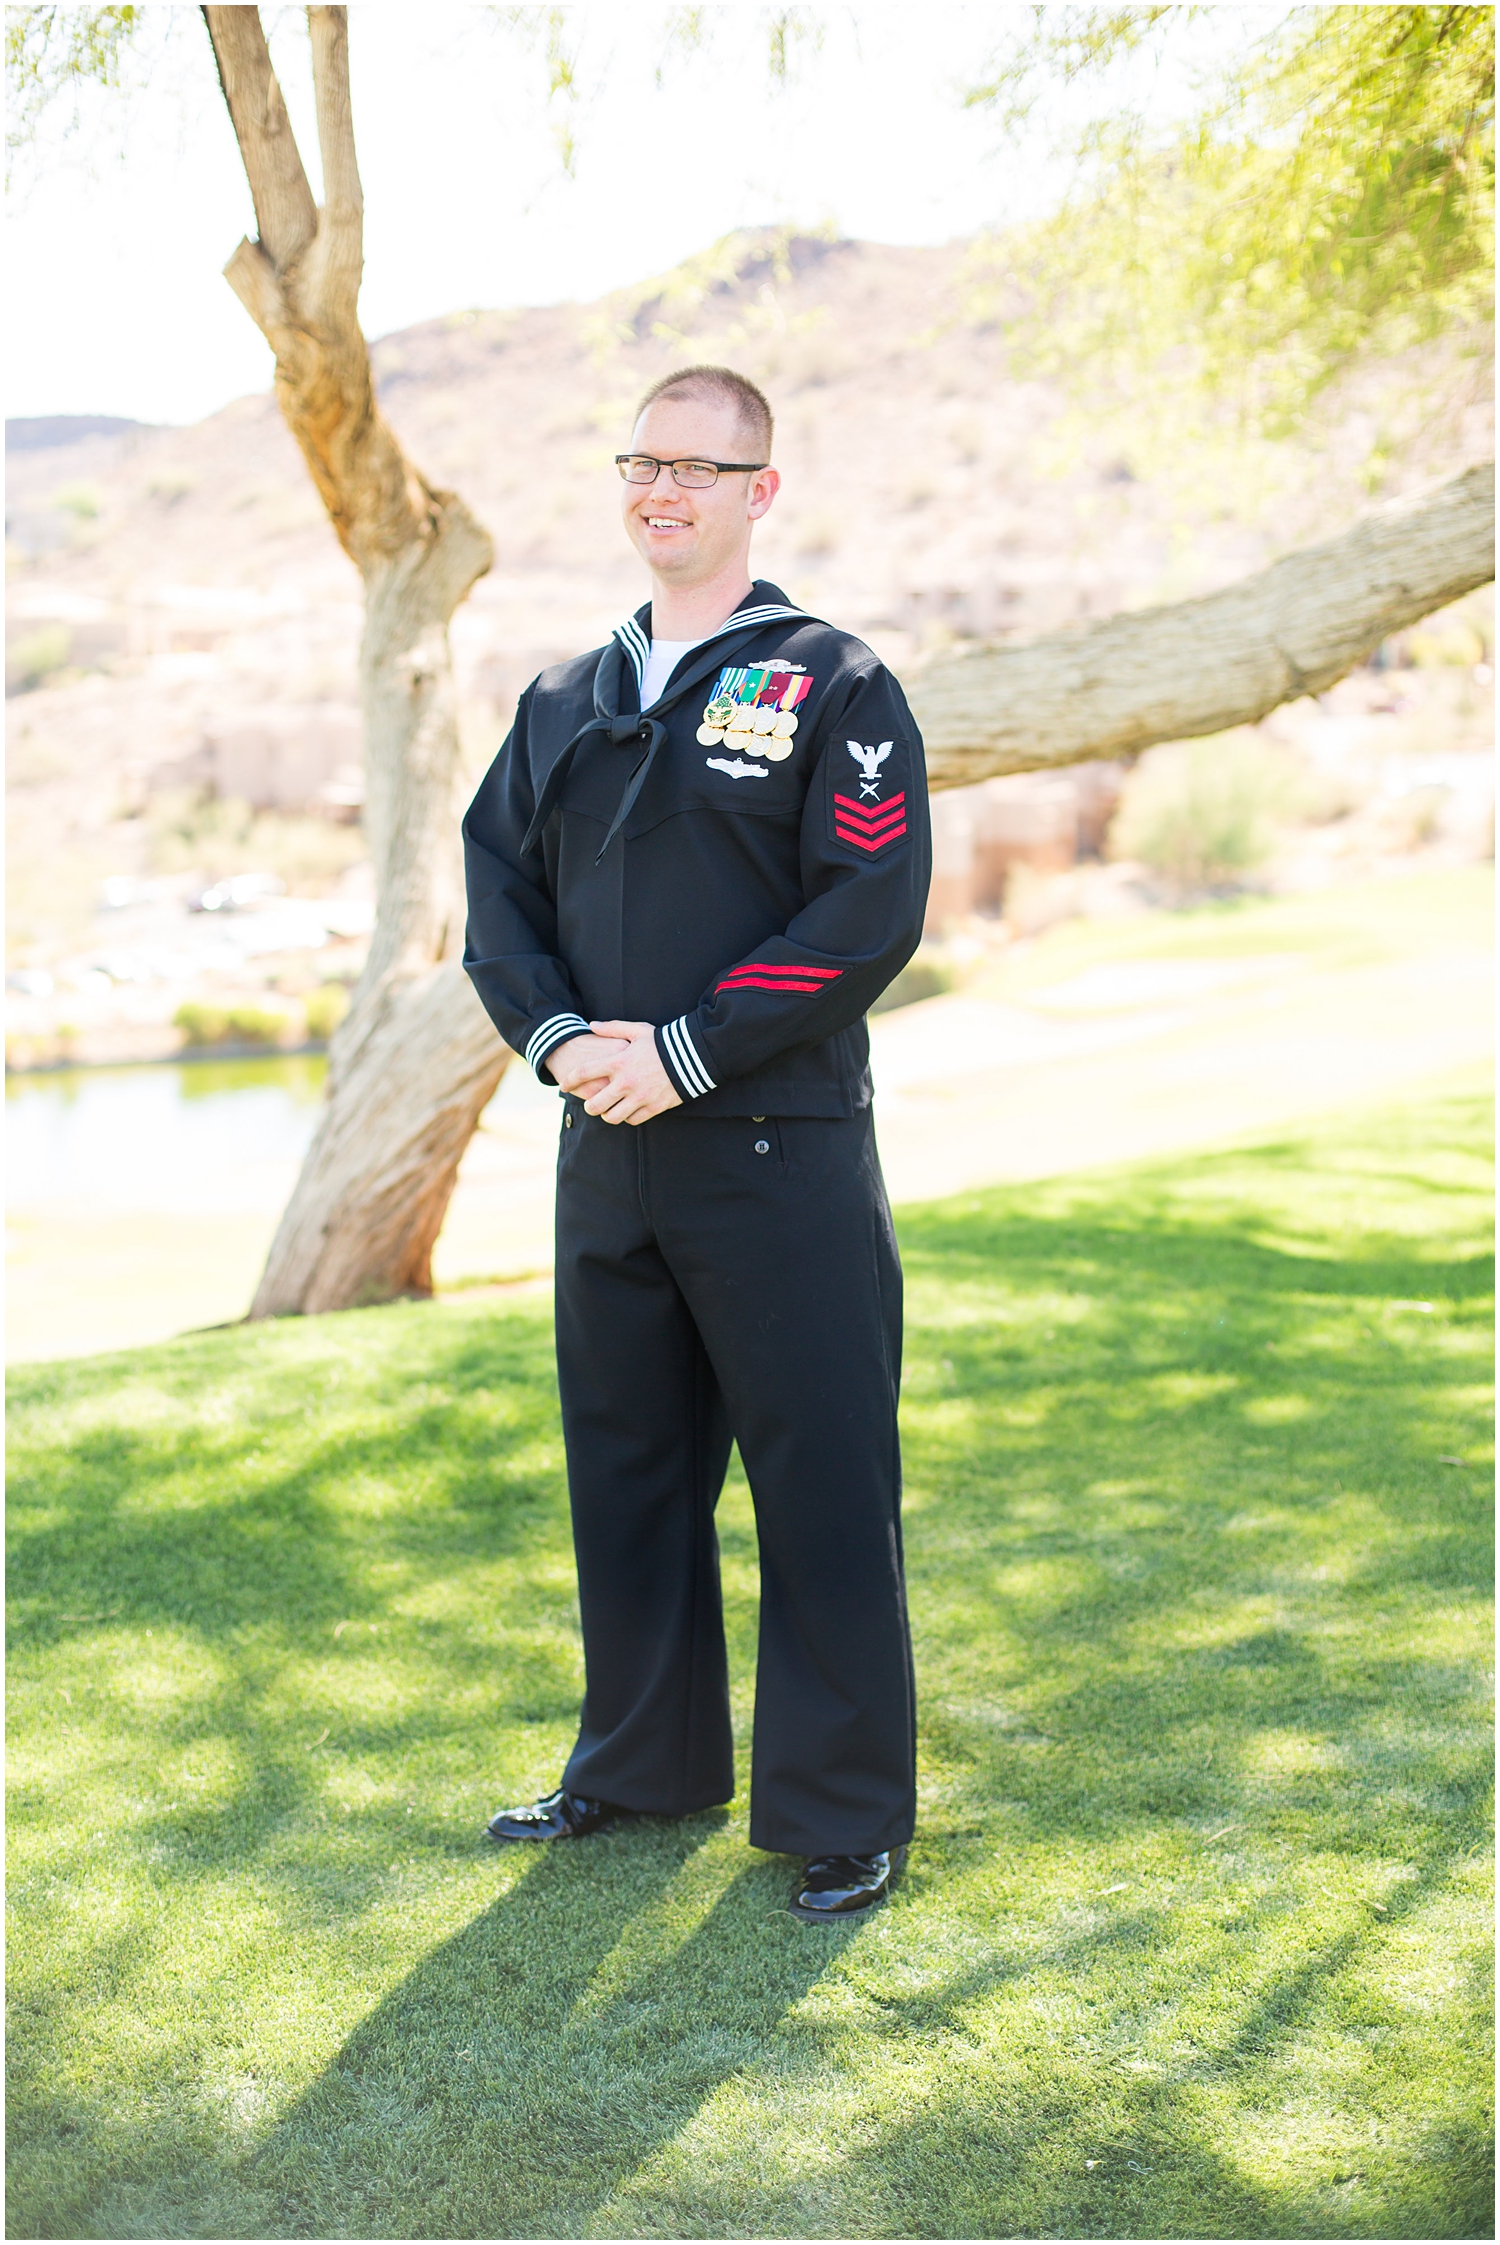 Groom in Navy dress uniform on wedding day